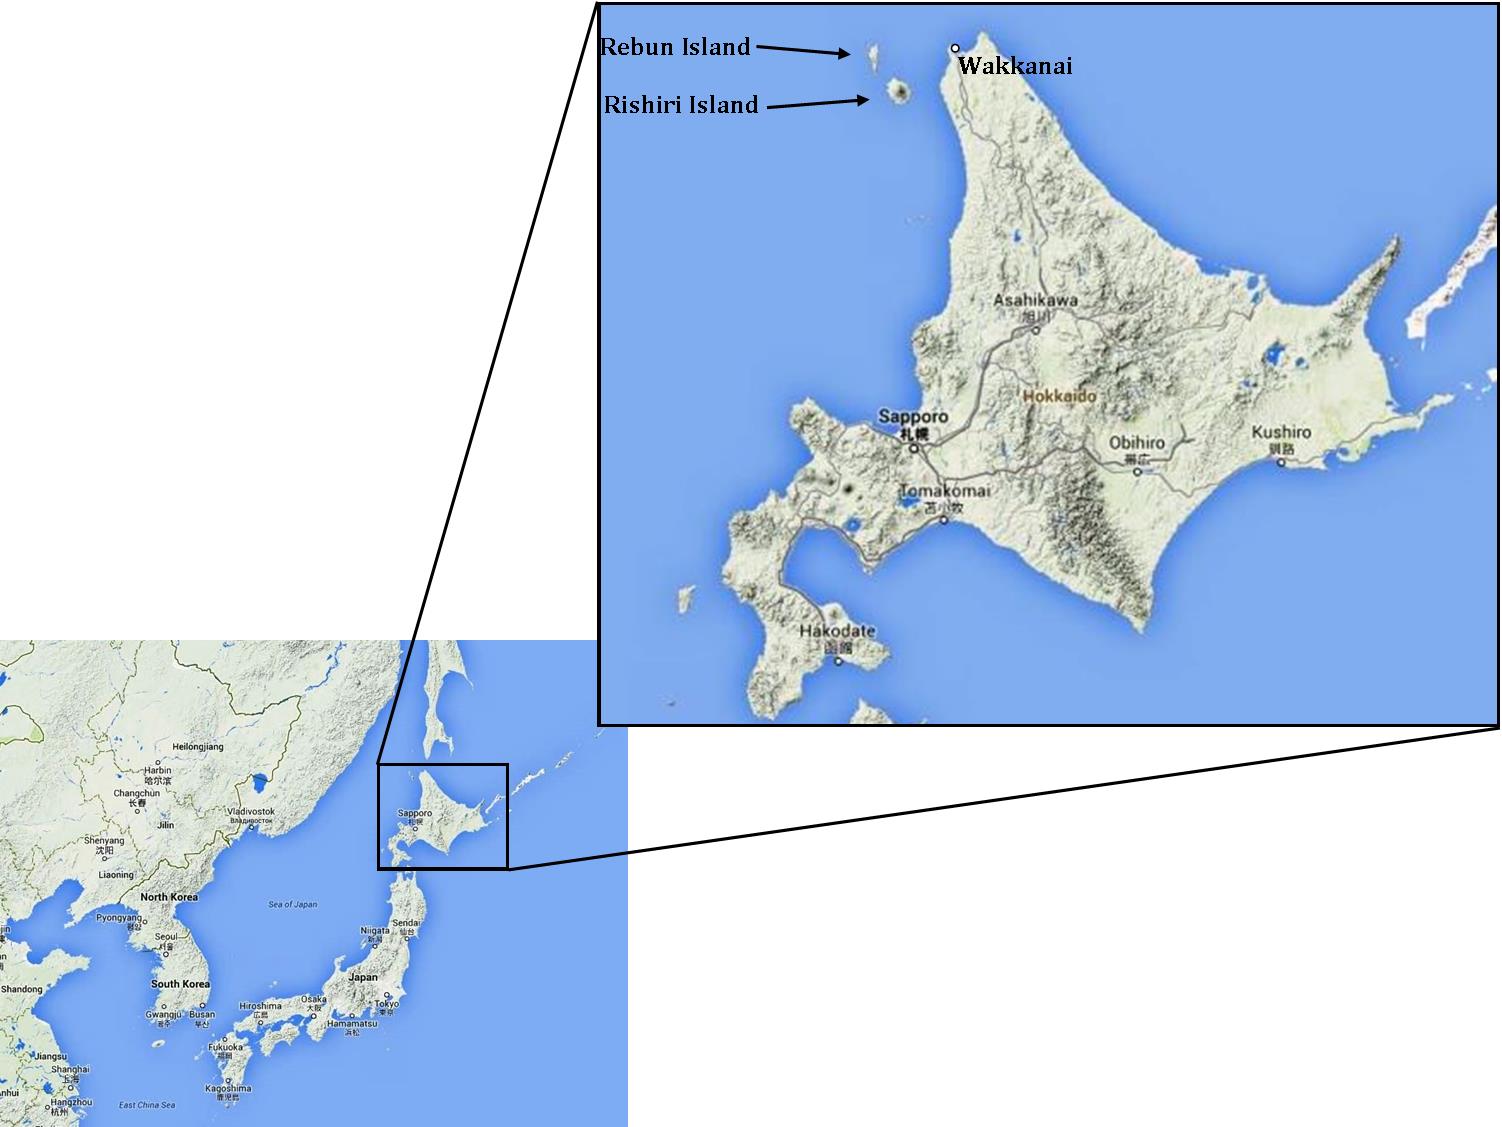 Rebun Island off northern Japan